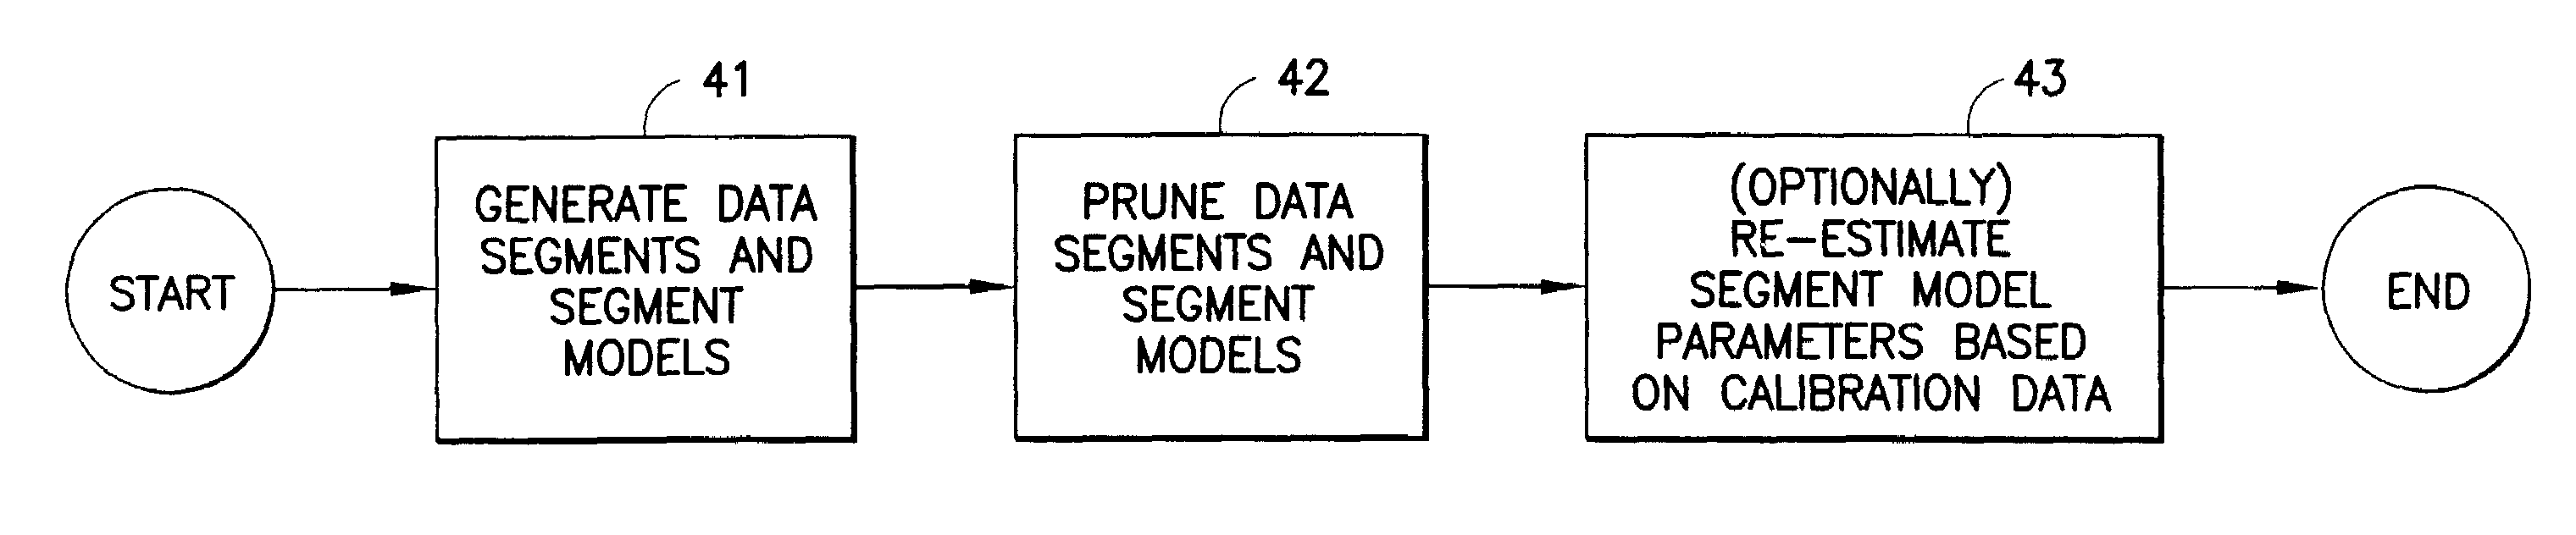 Method for constructing segmentation-based predictive models